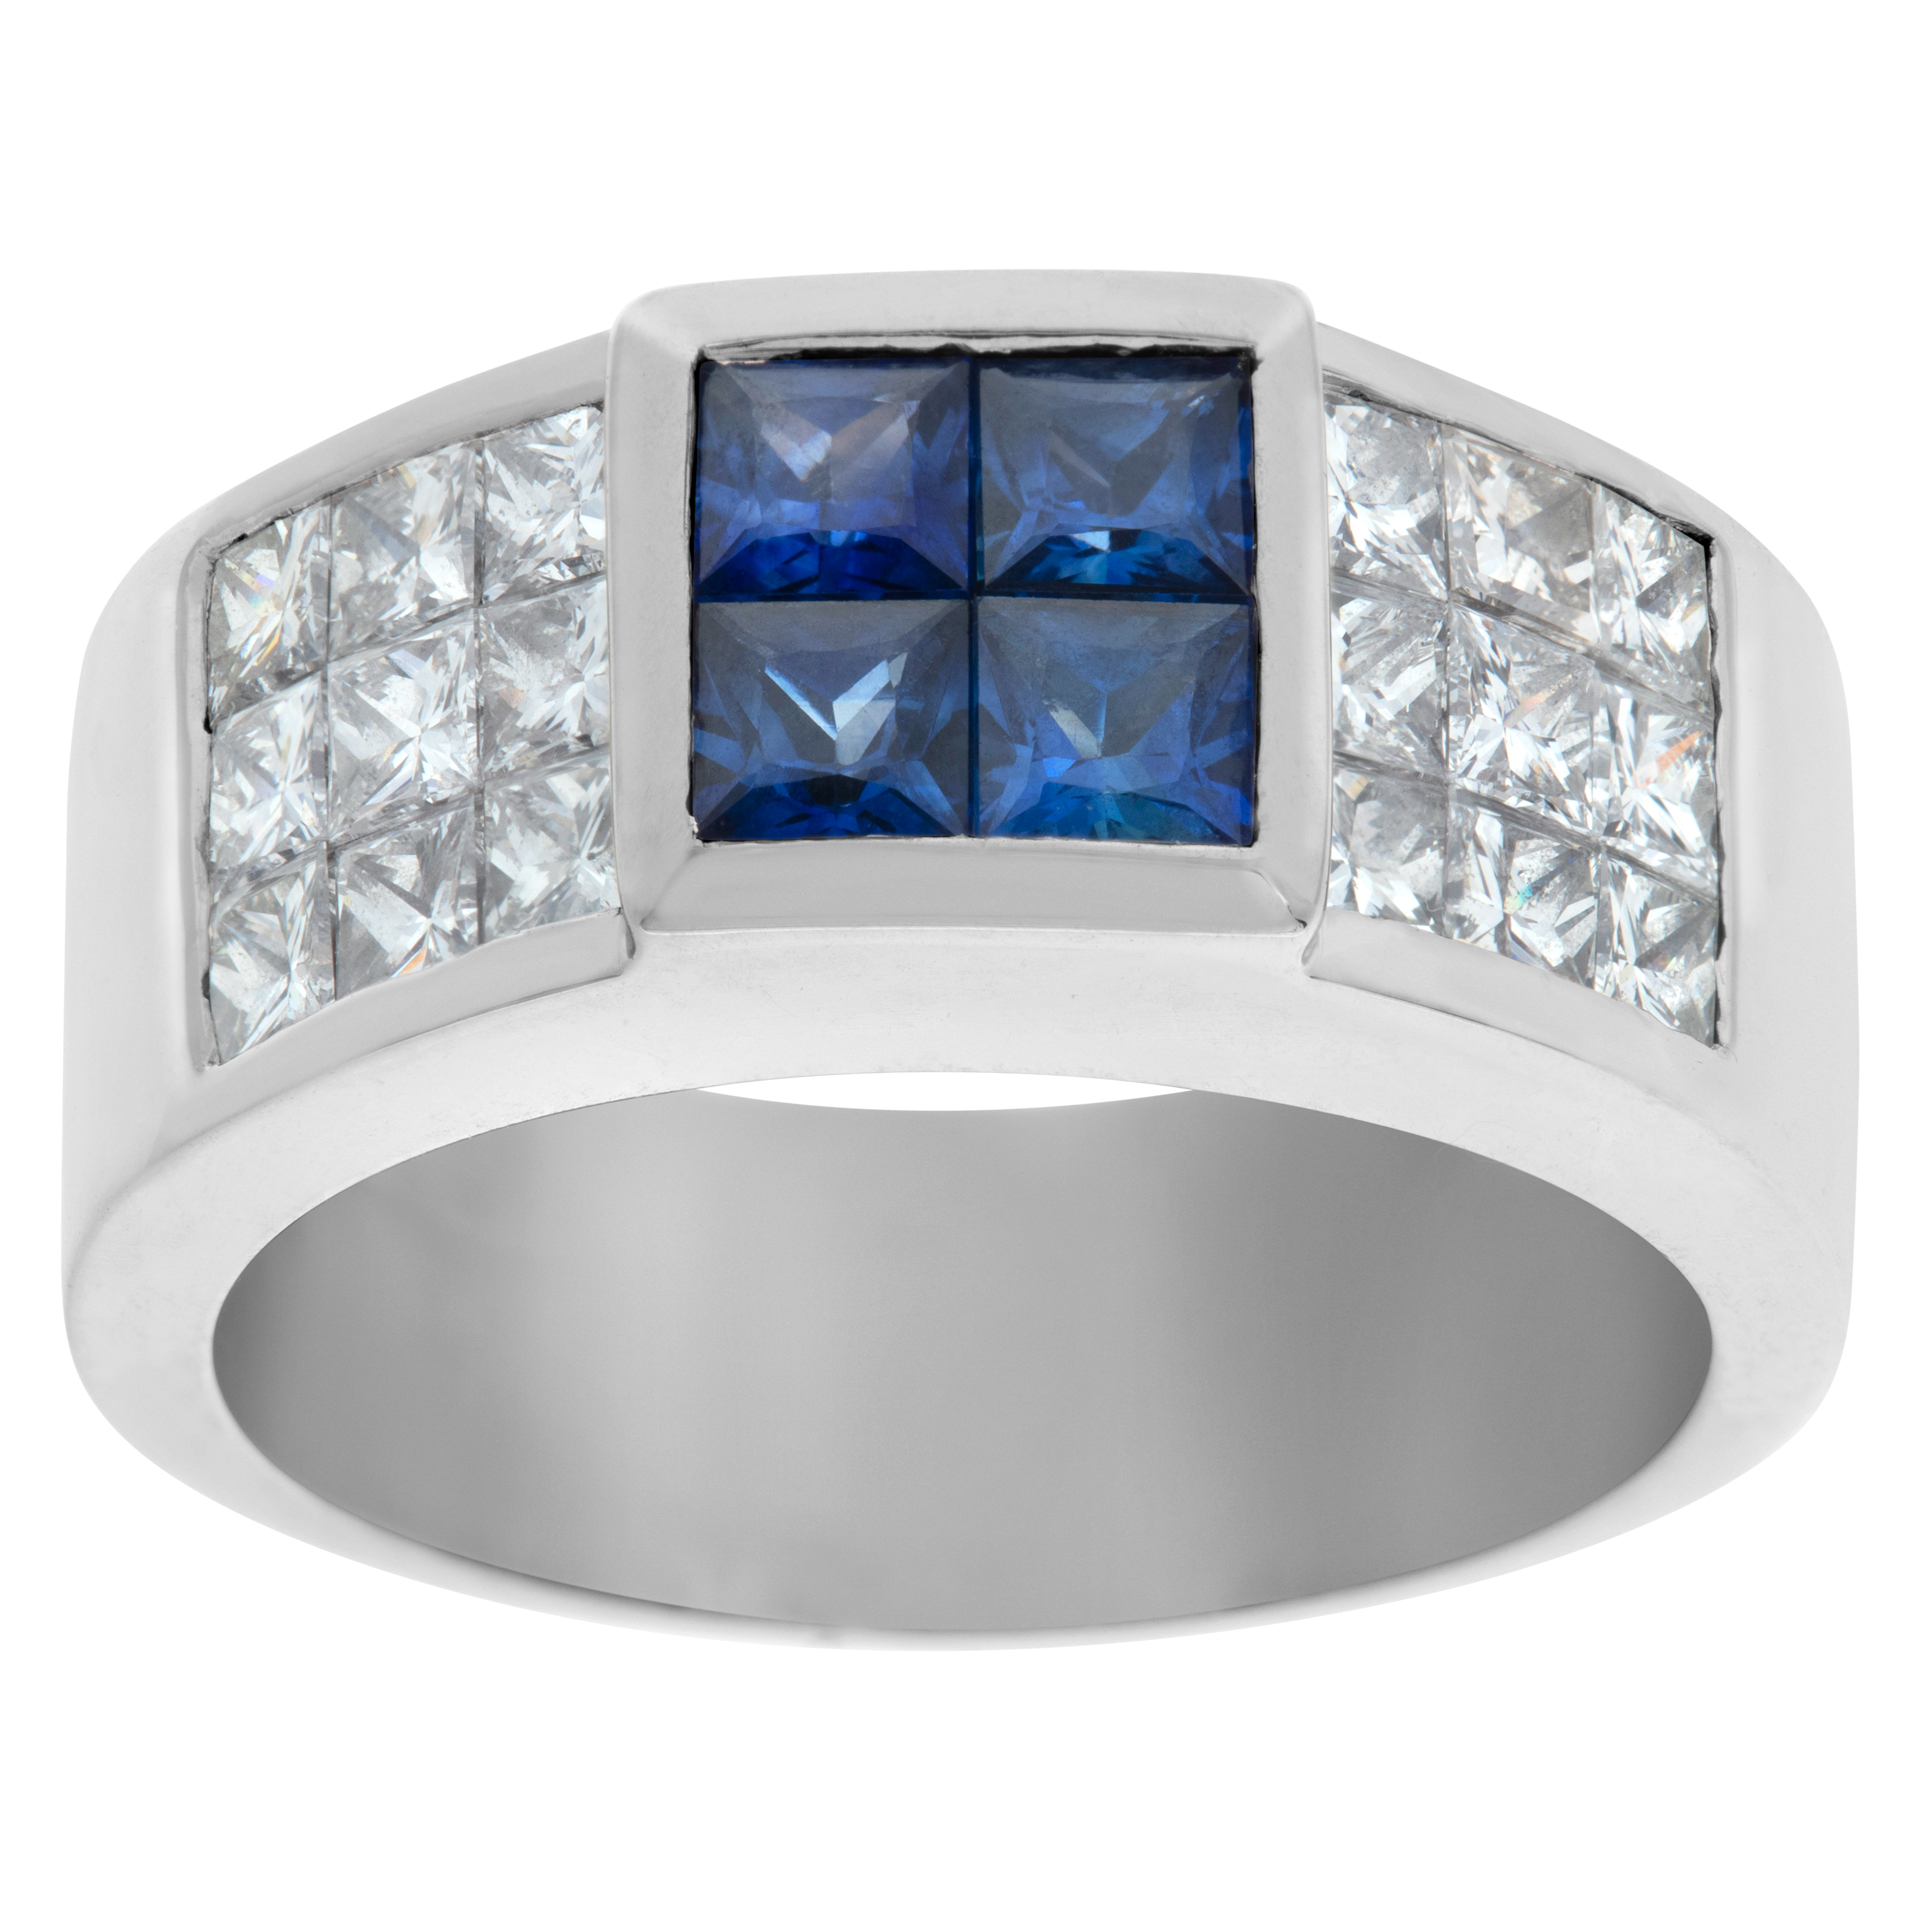 emerald cut sapphire & Princess cut diamonds ring in 18K white gold- Size 6.25 image 1